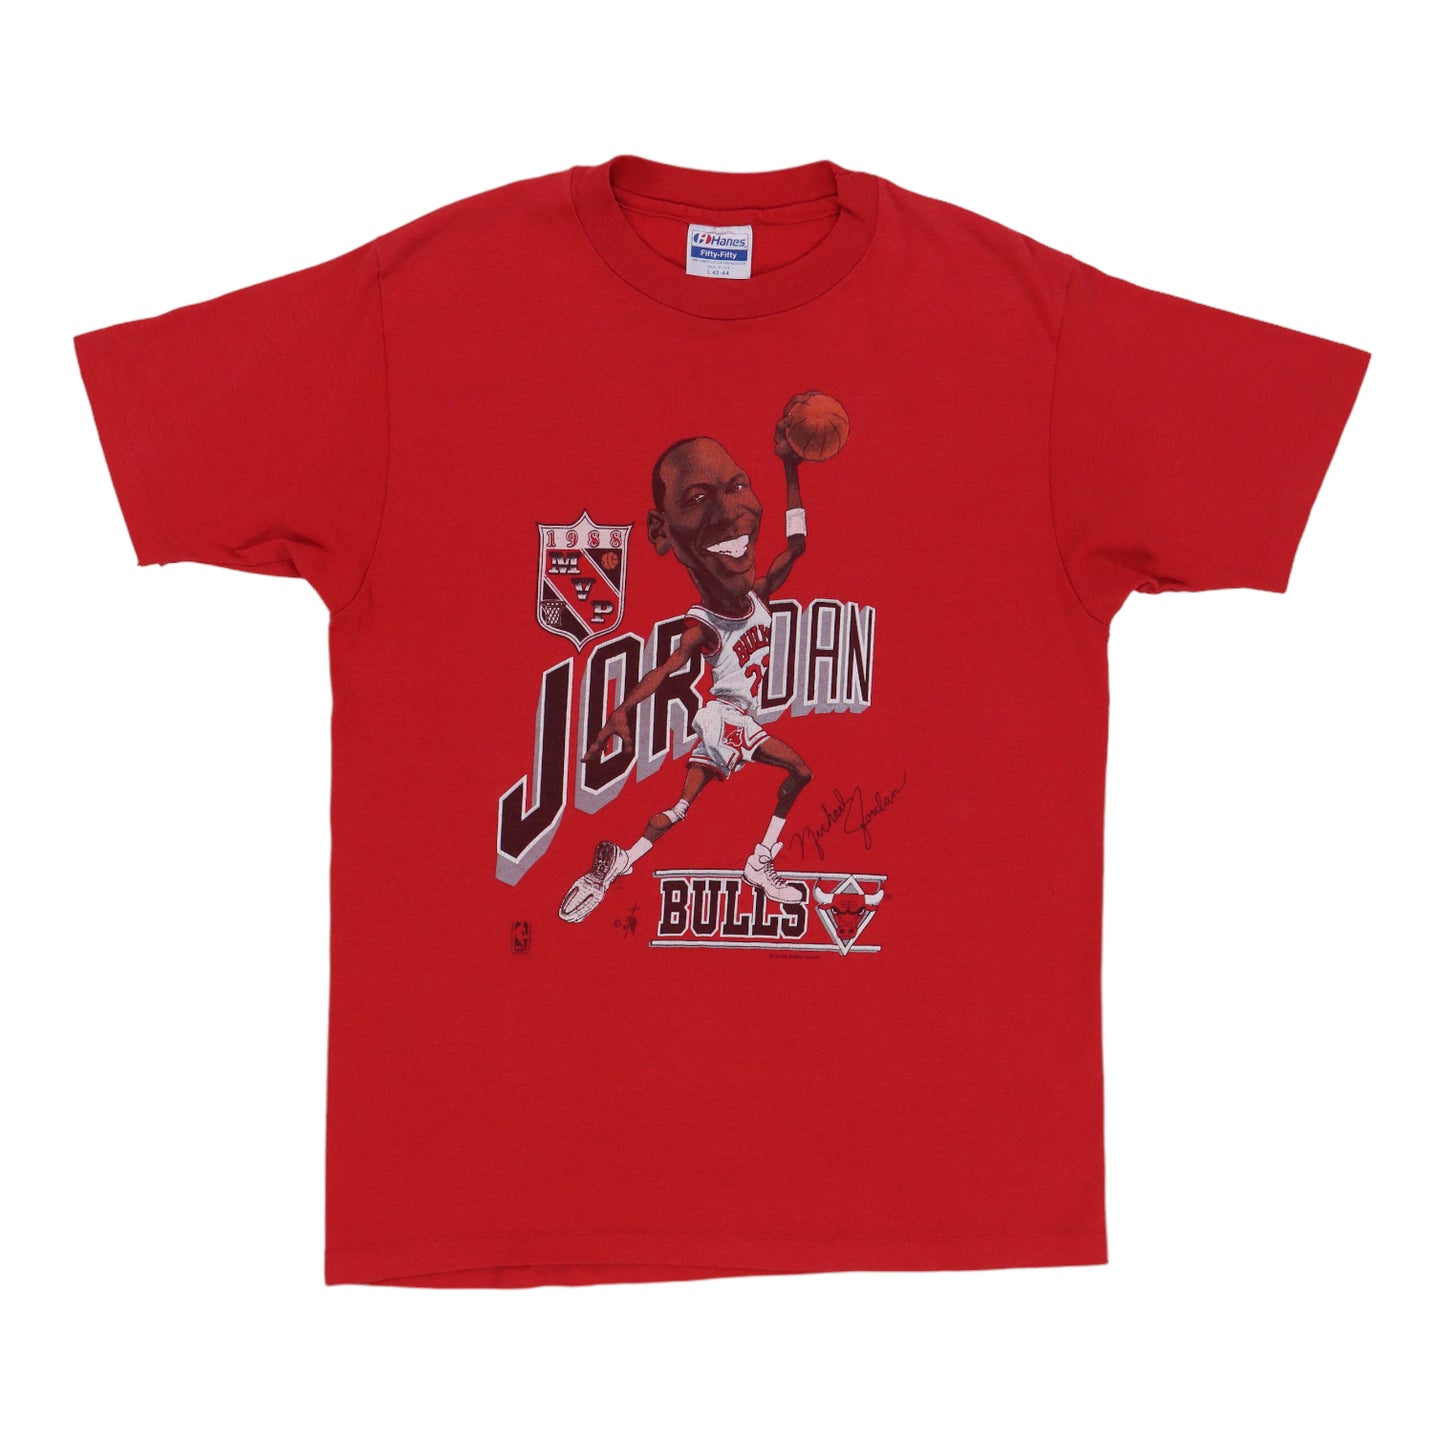 Wyco Vintage 1988 Michael Jordan MVP Chicago Bulls NBA Shirt